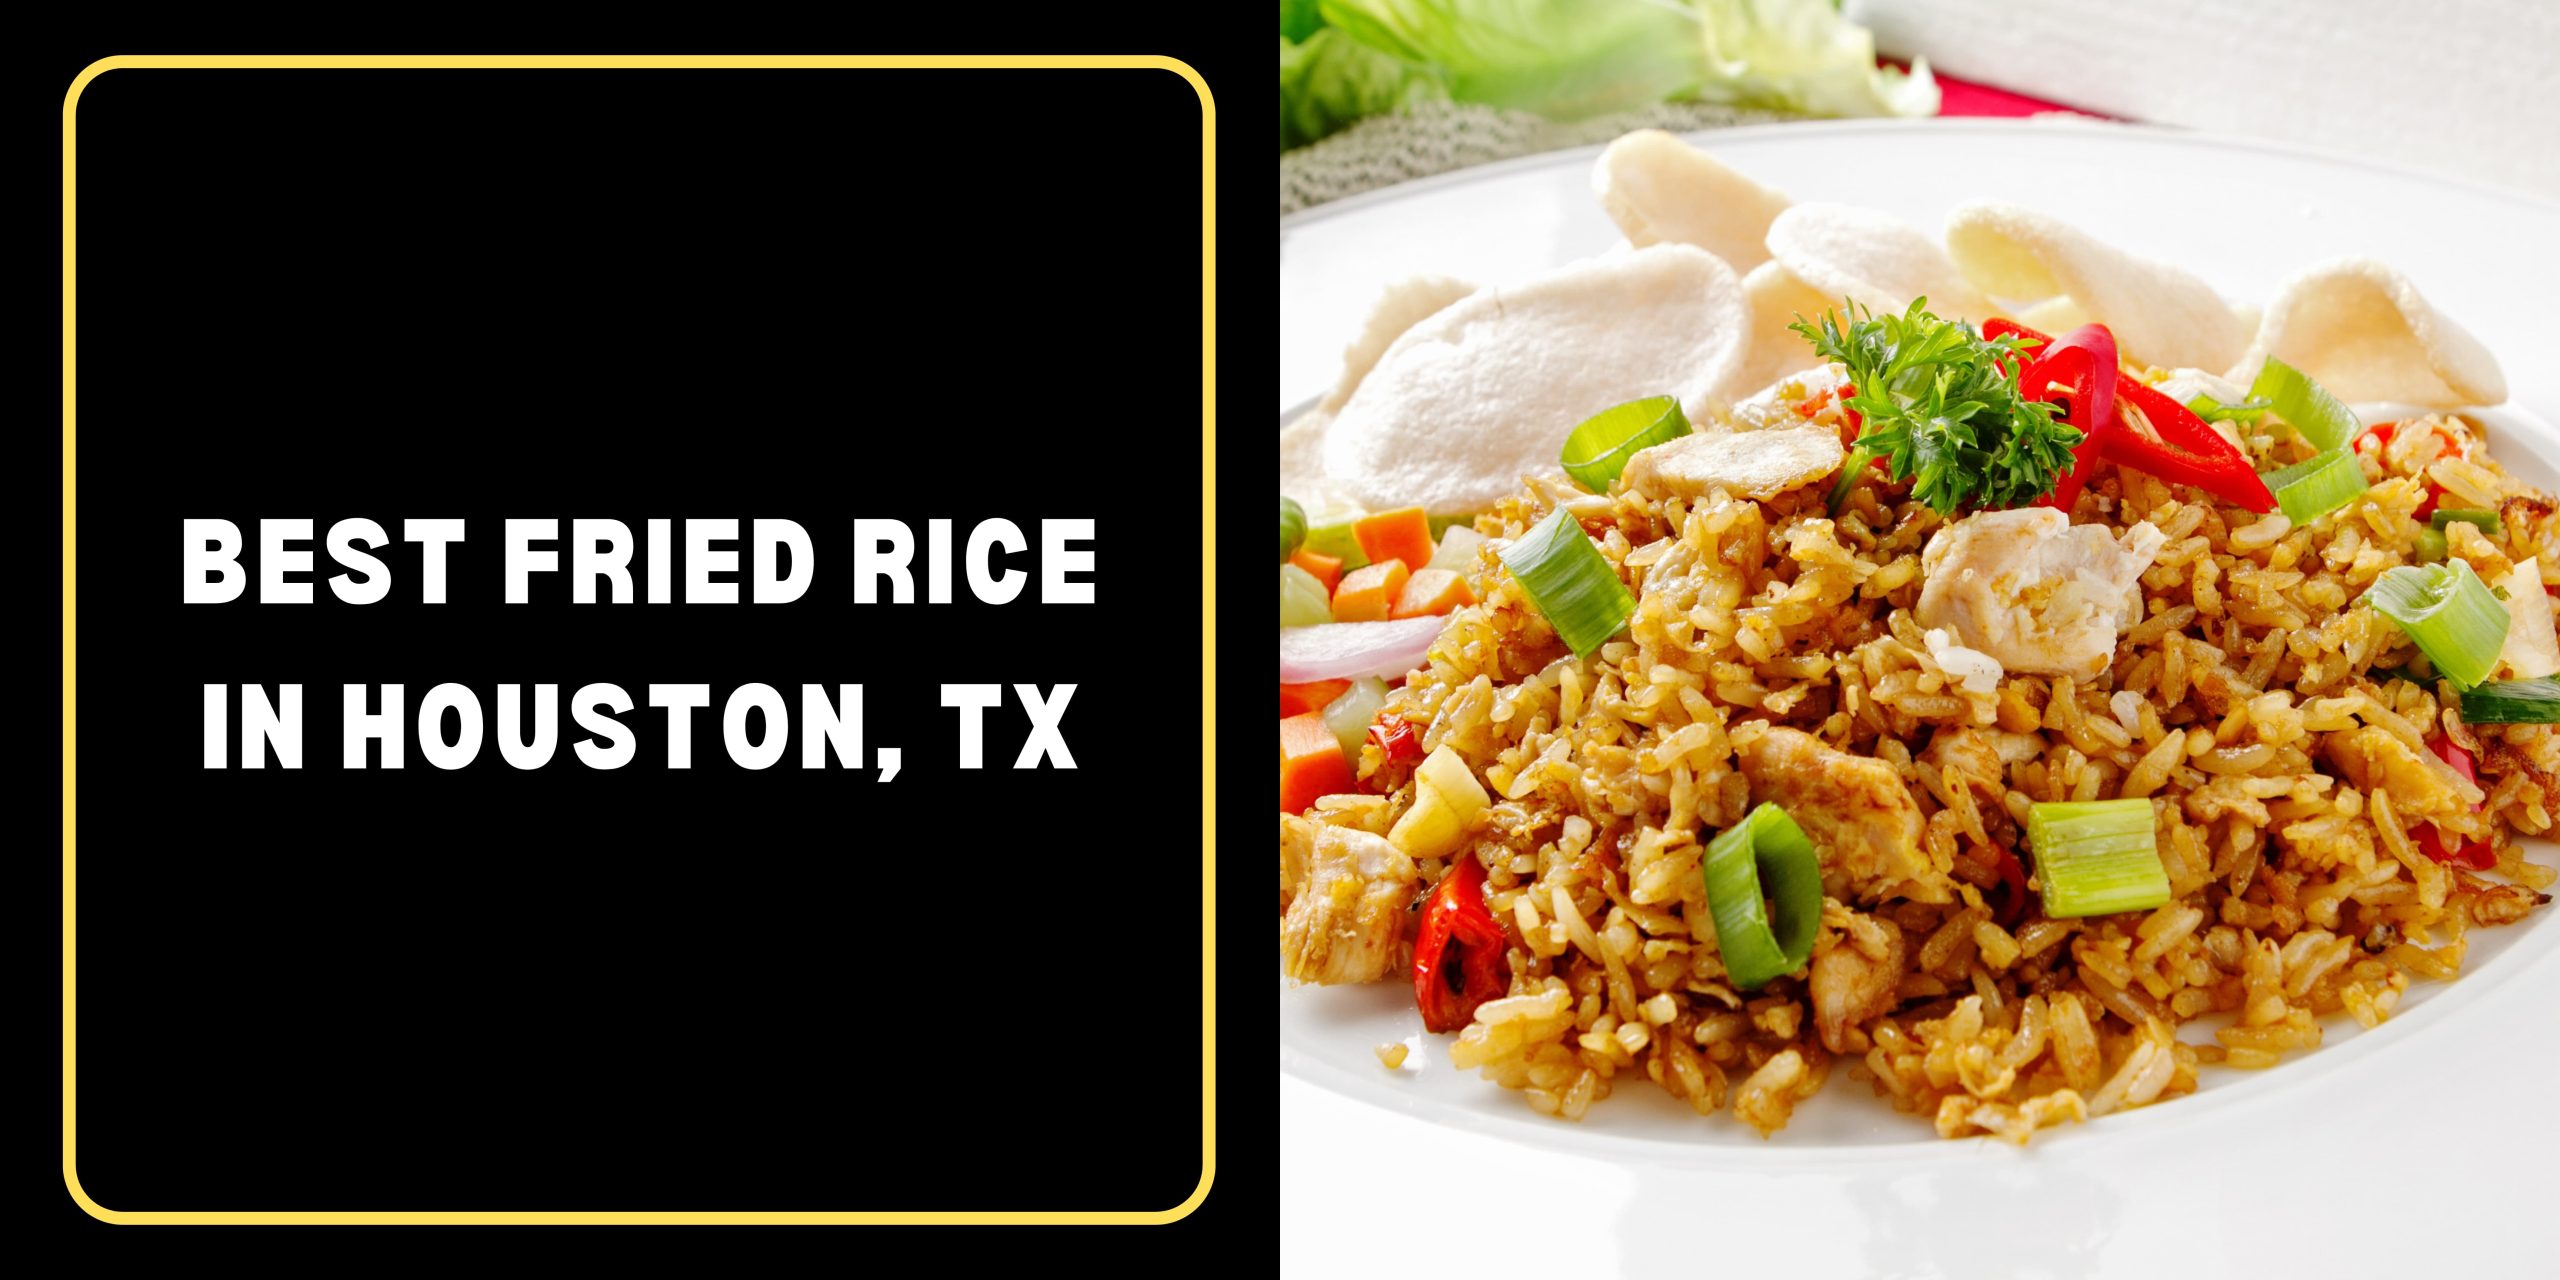 Best Fried Rice in Houston, TX